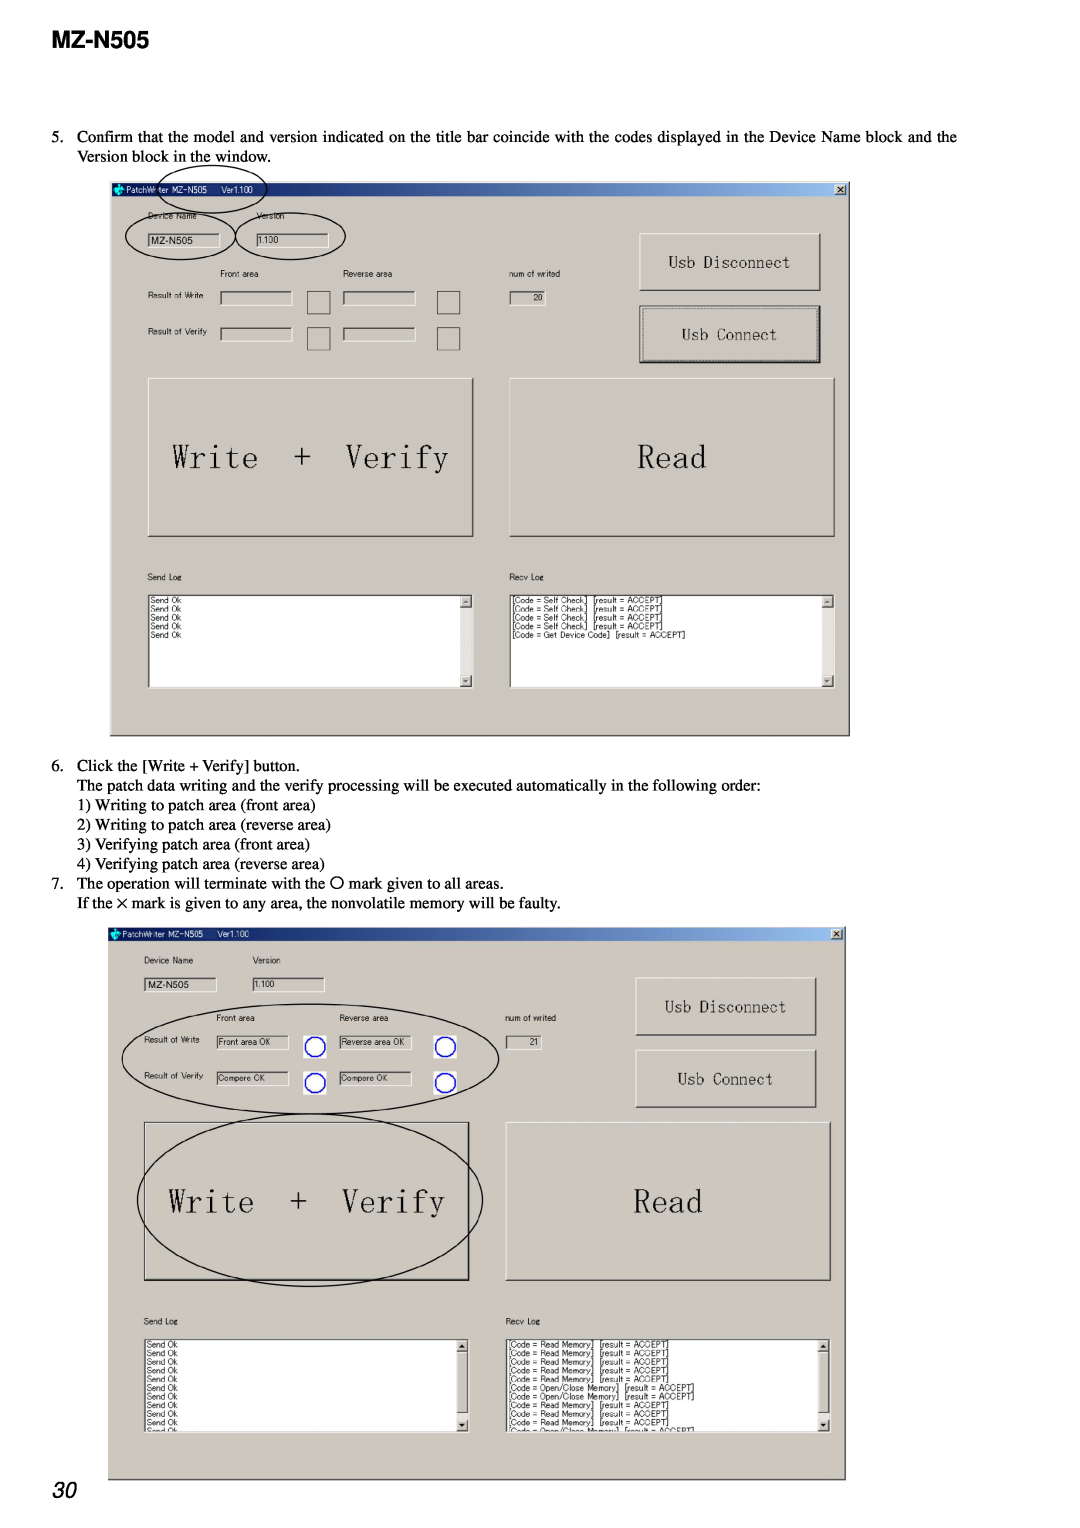 Sony MZ-N505 service manual Click the Write + Verify button 